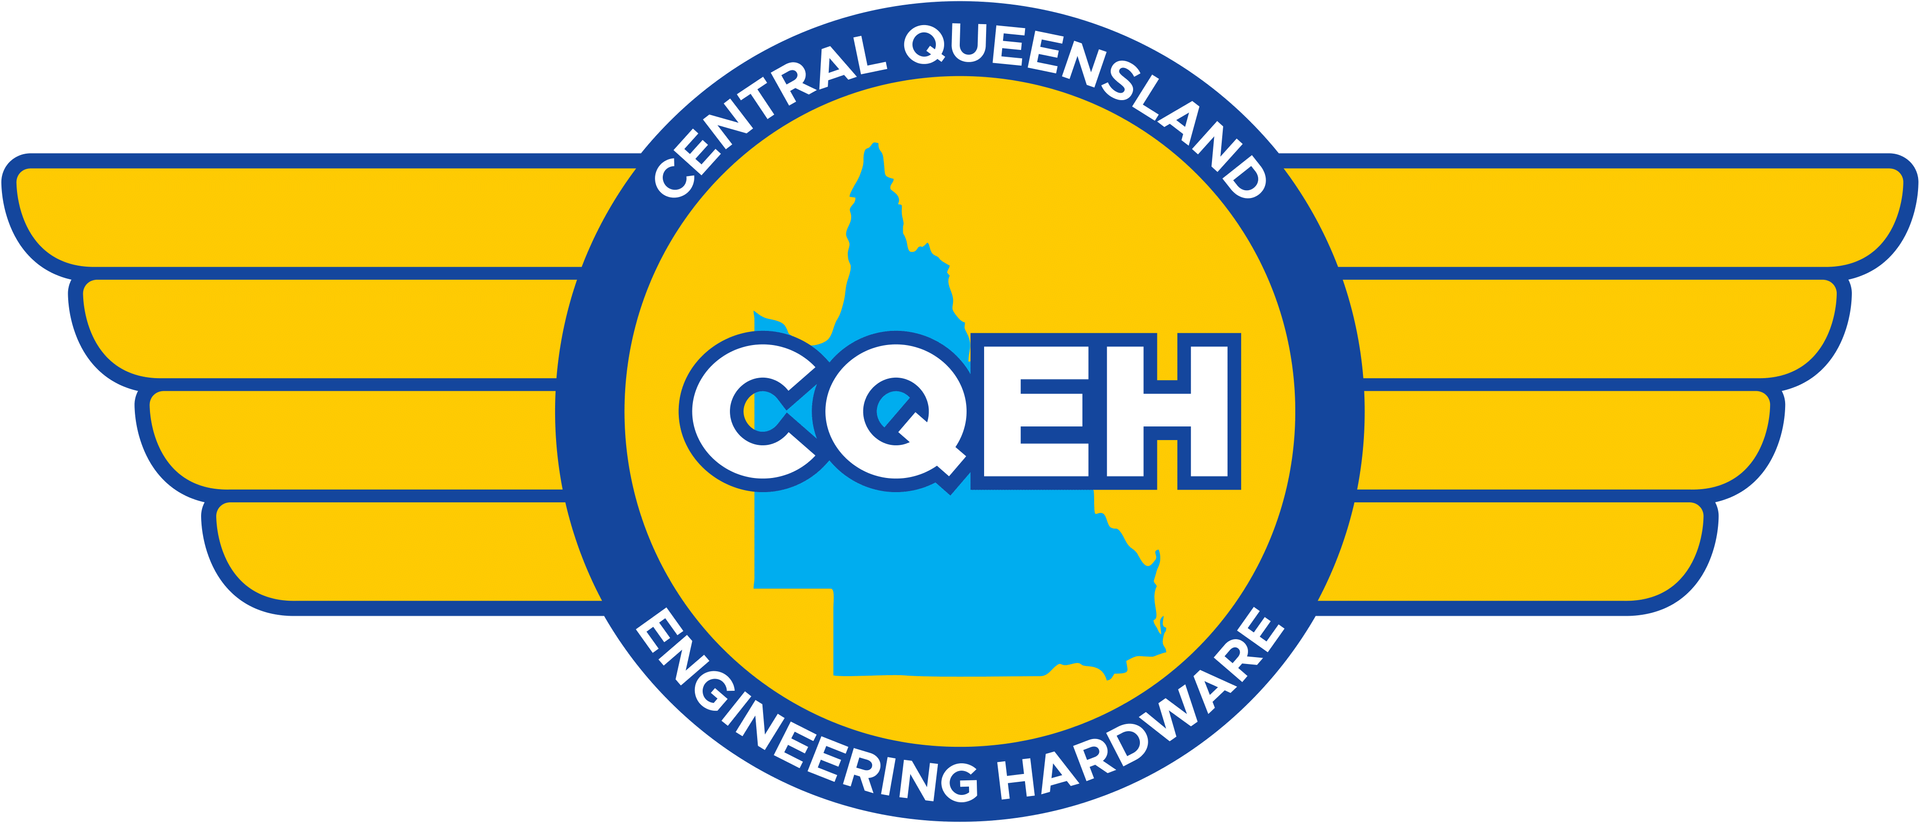 Central Queensland Engineering Hardware